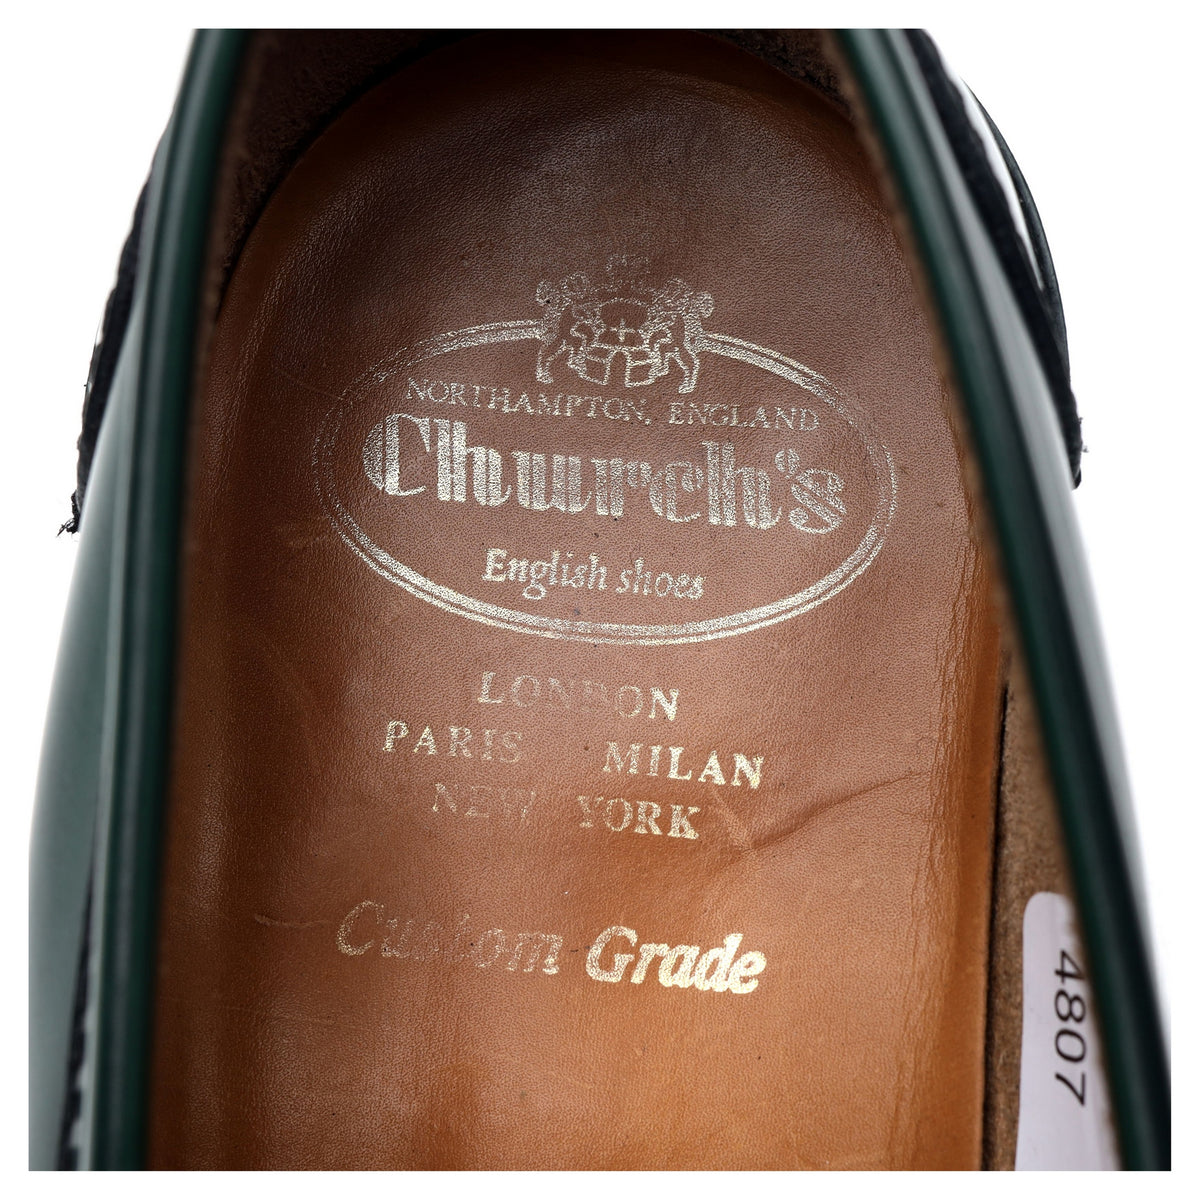 &#39;Tiverton&#39; Green Leather Tassel Loafers UK 9 F